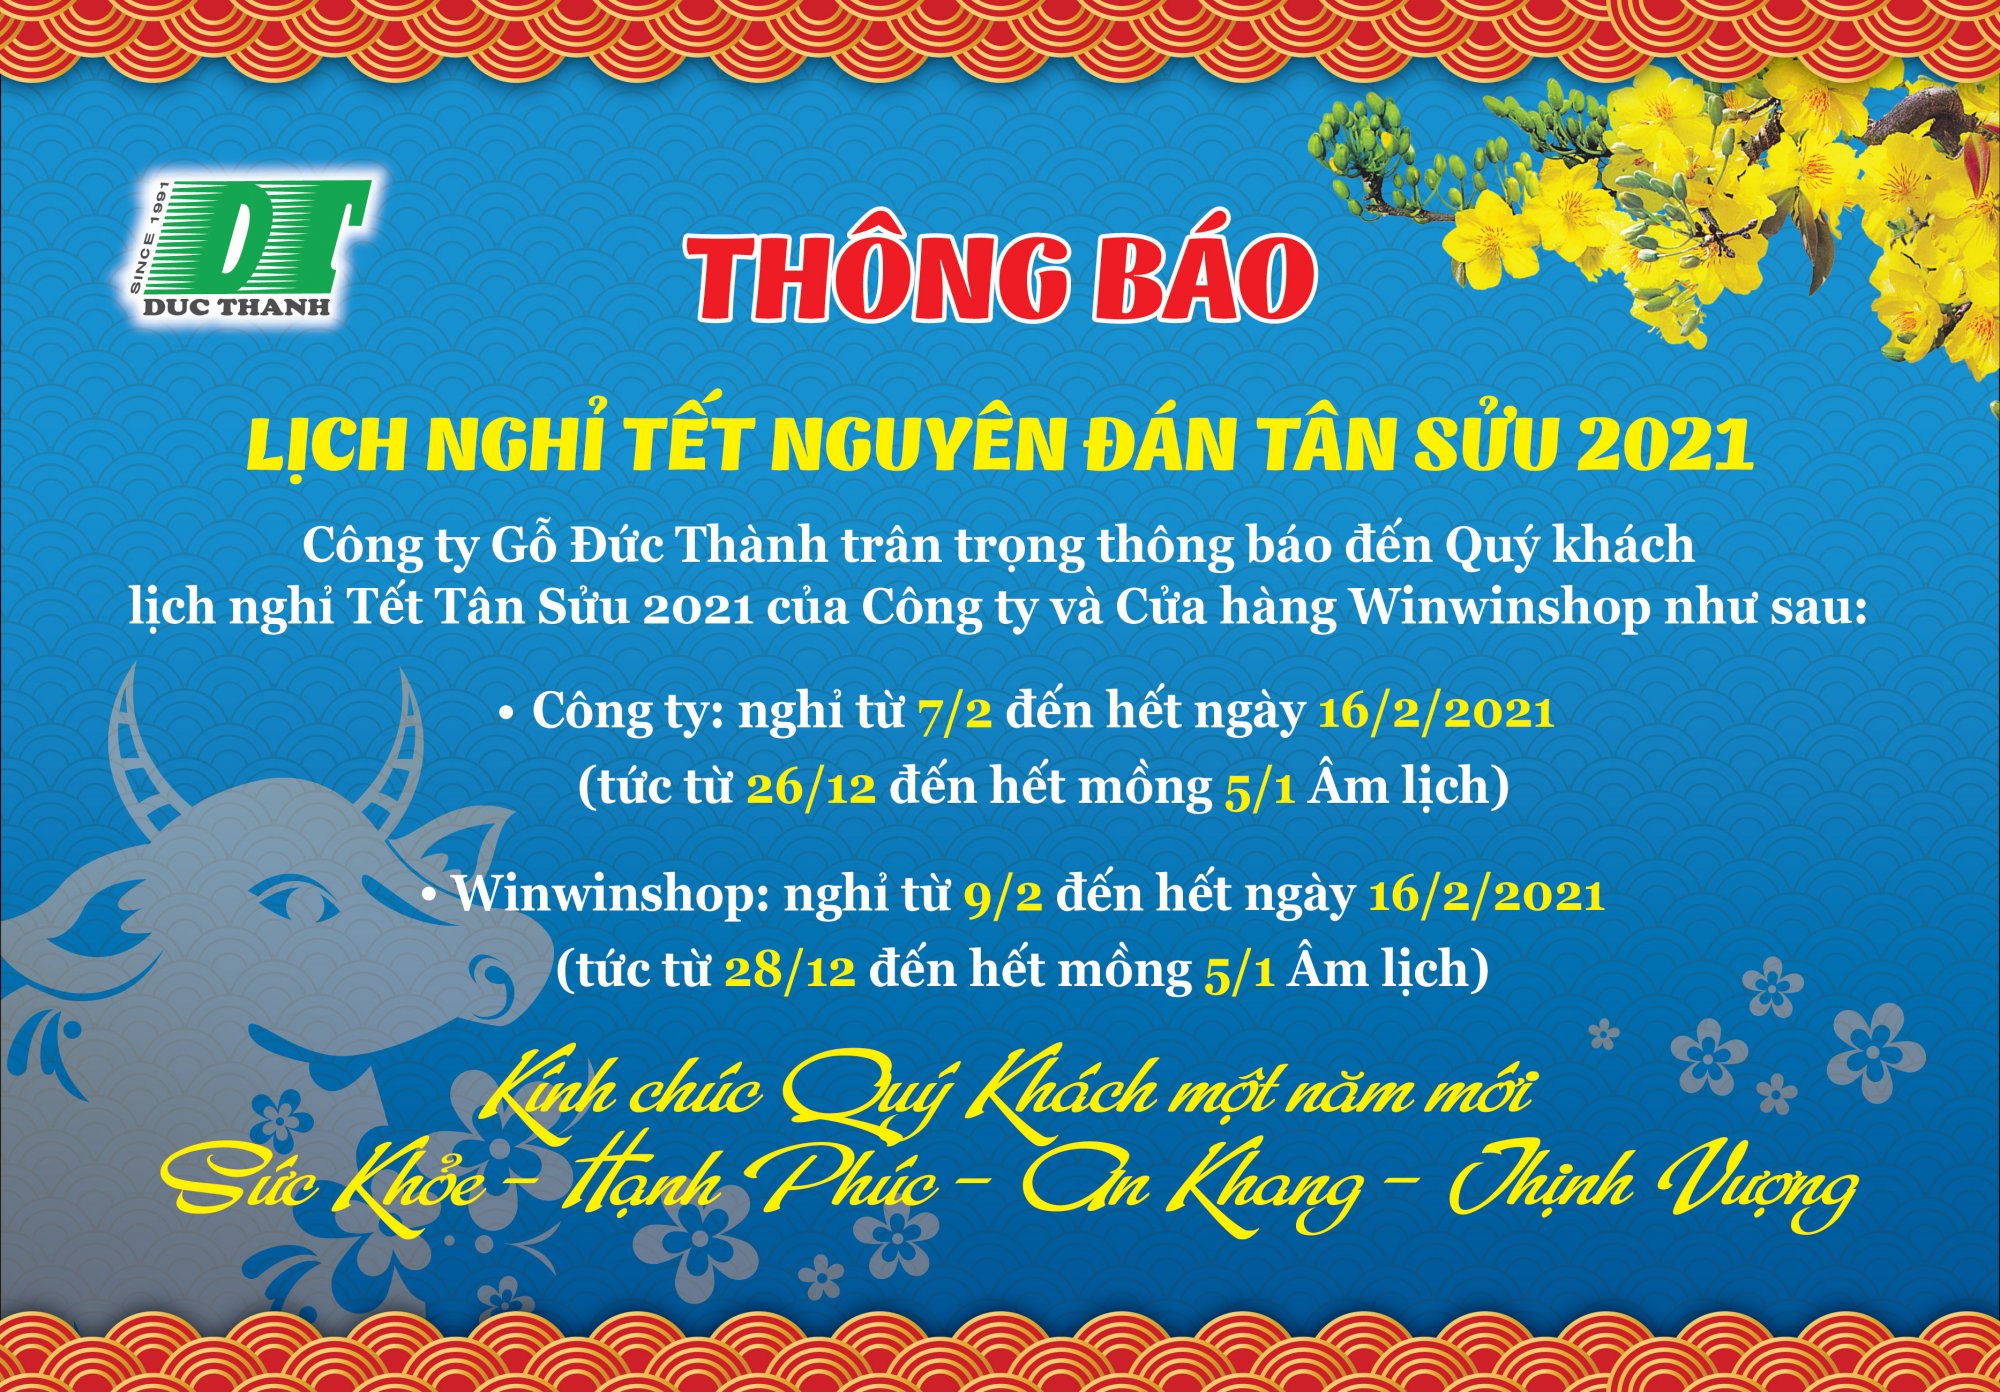 Thong_bao_nghi_Tet_2021-01